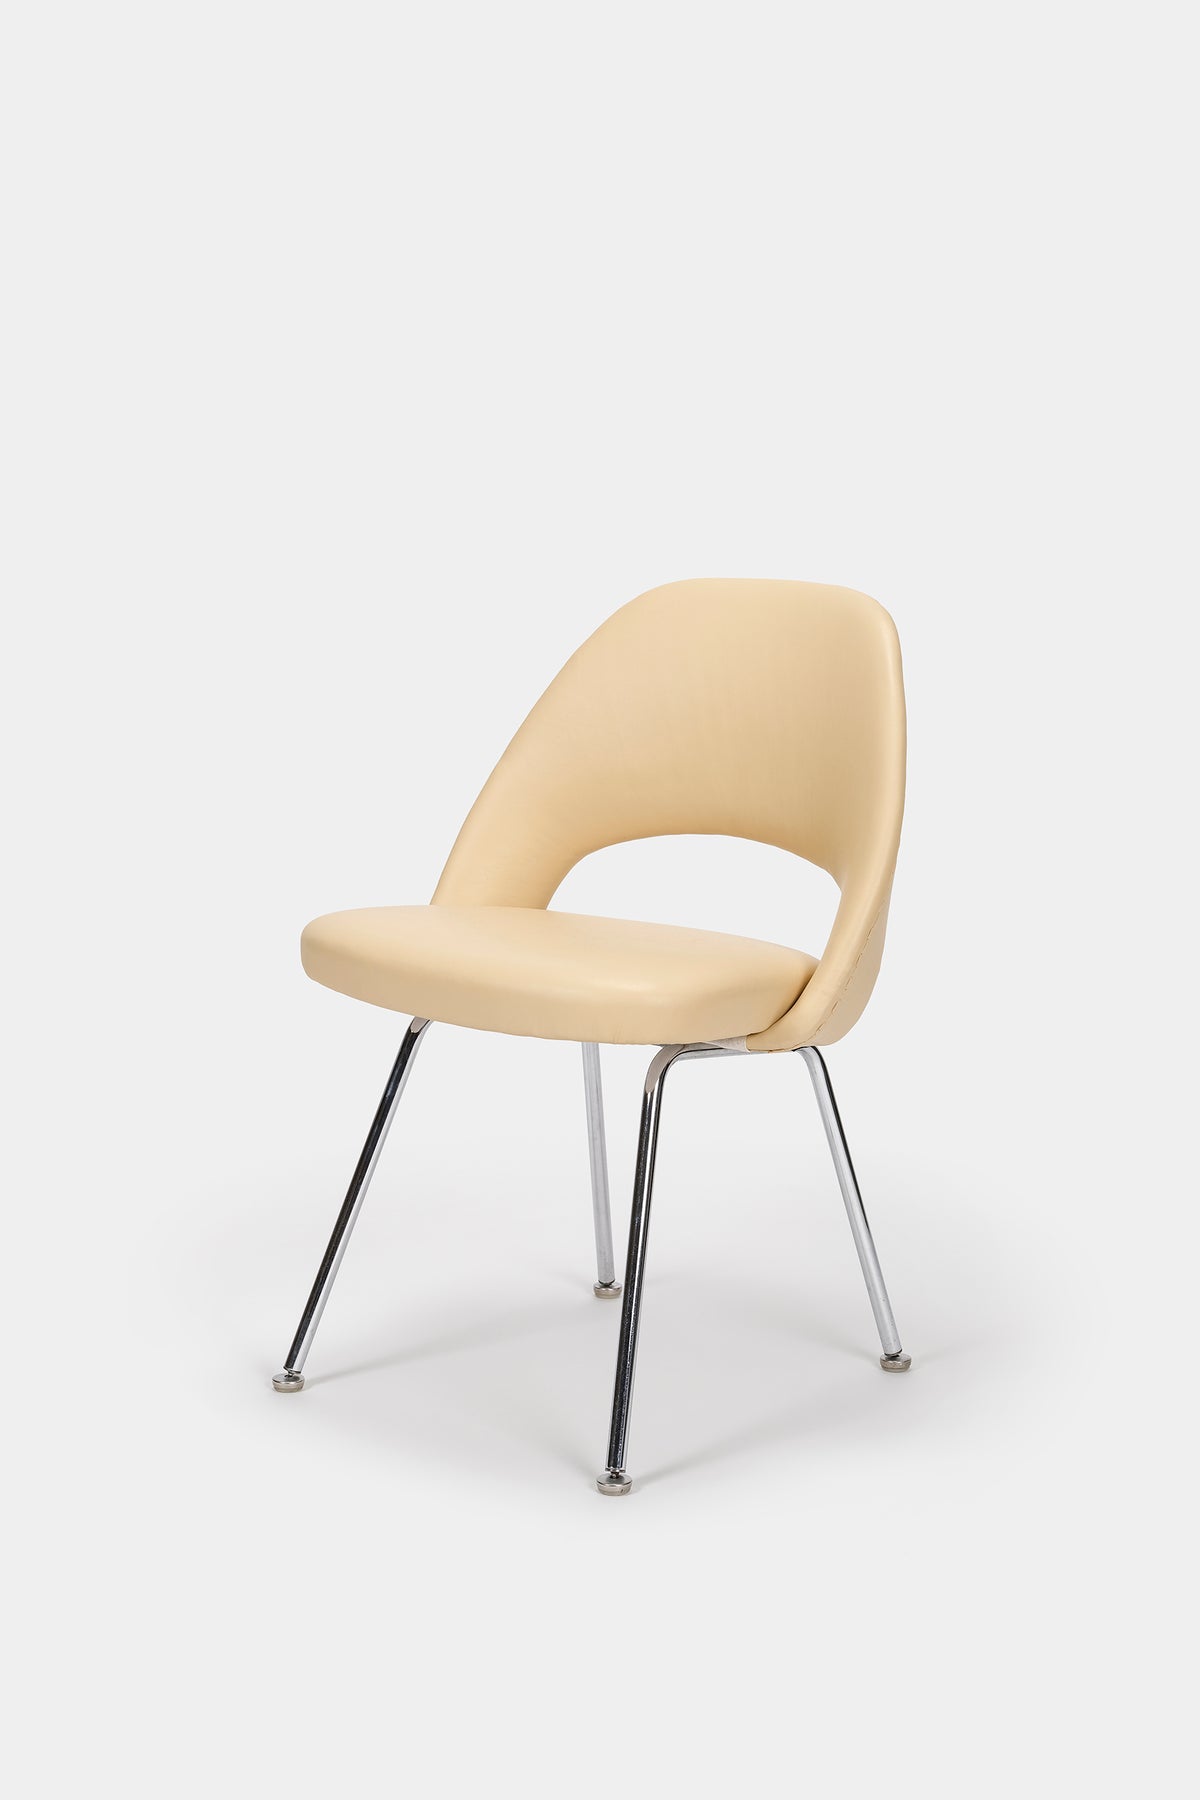 Eero Saarinen, Chair Model 72, Knoll International, 50s